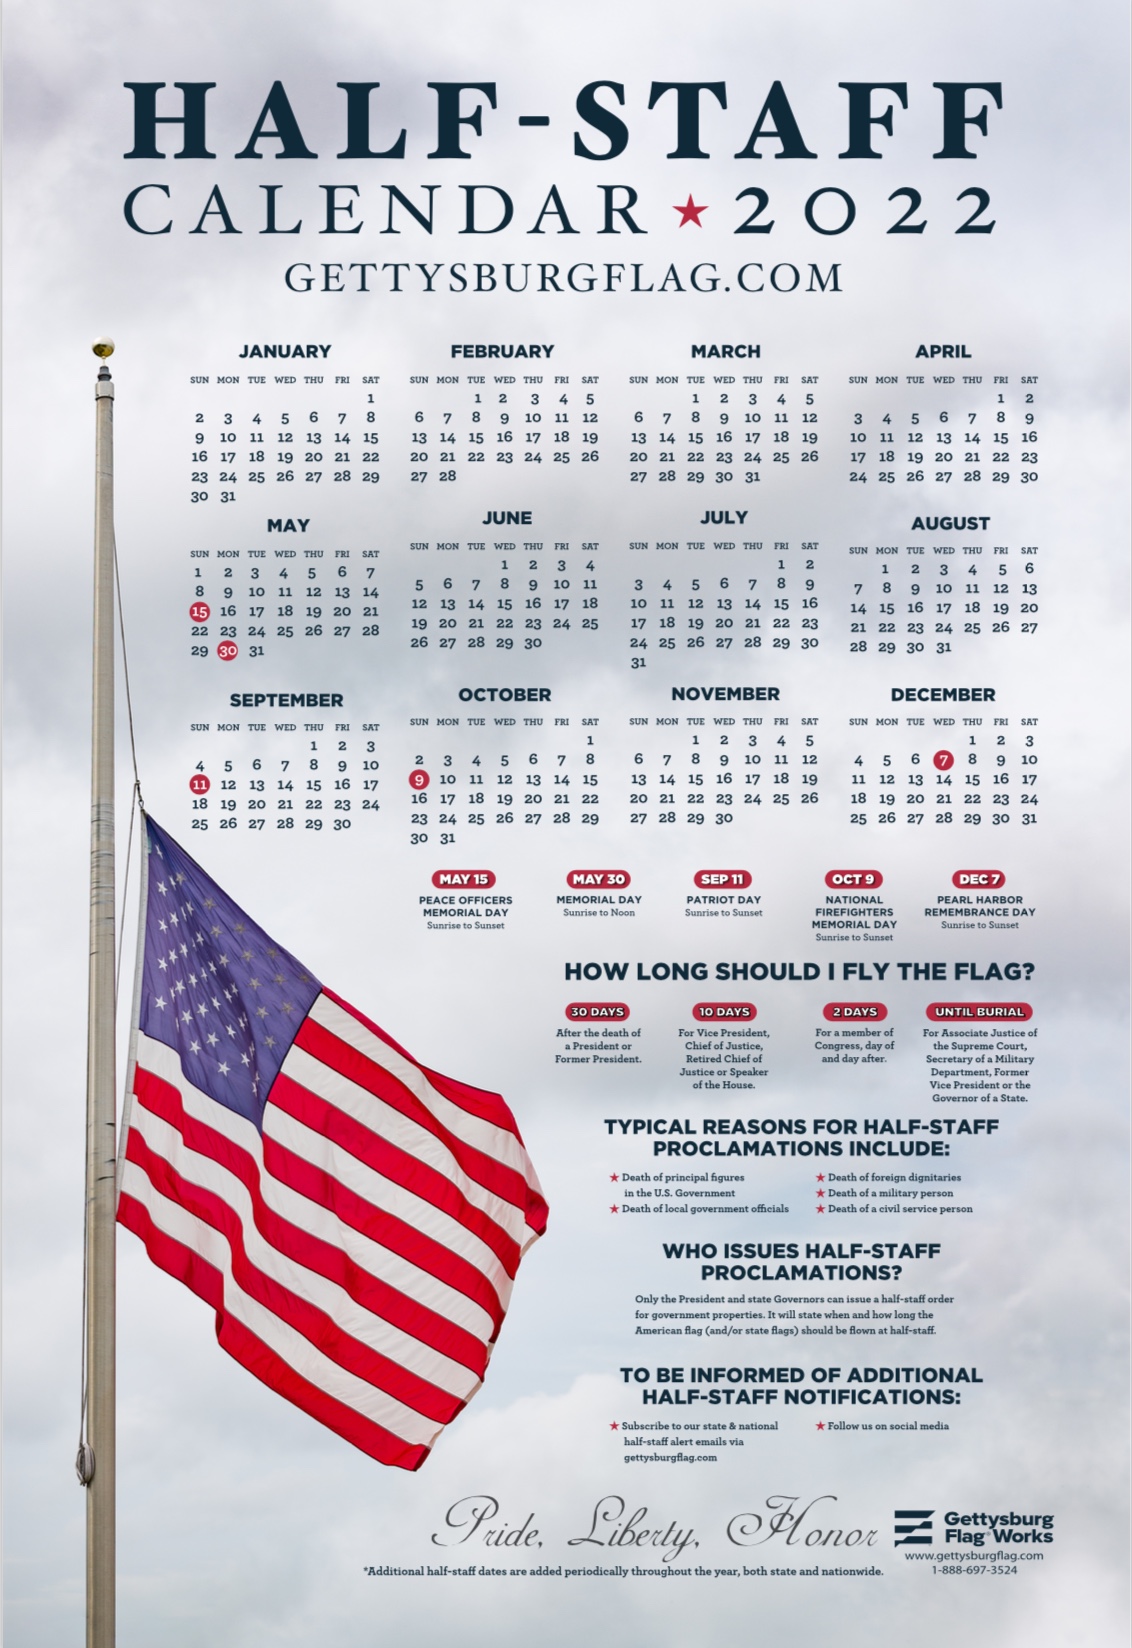 2022 Half Staff Calendar from Gettysburg Flag Works